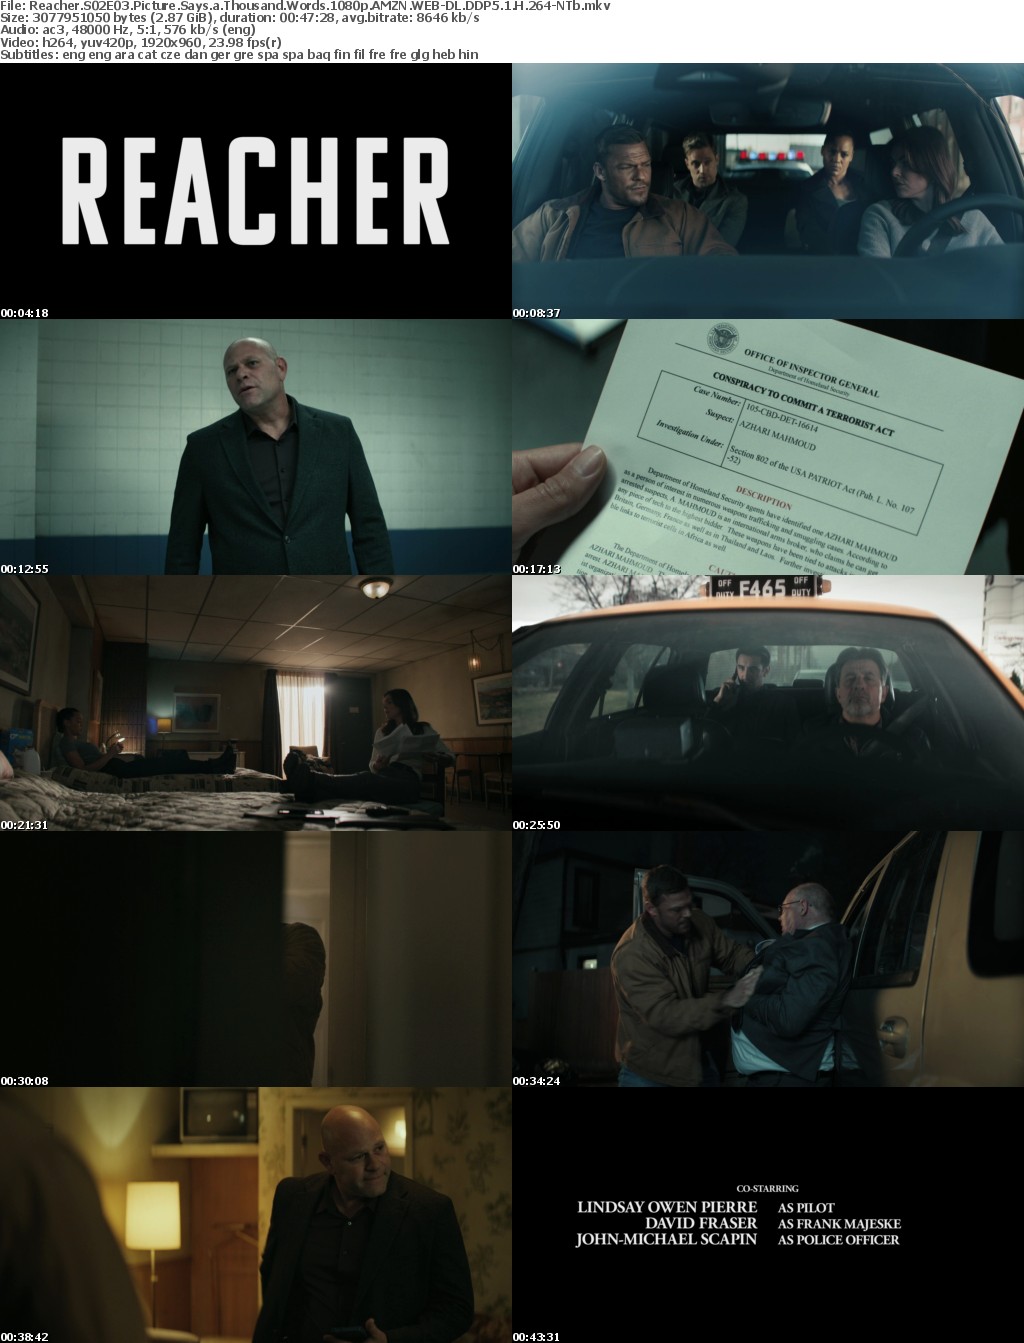 Reacher S02E03 Picture Says a Thousand Words 1080p AMZN WEB-DL DDP5 1 H 264-NTb